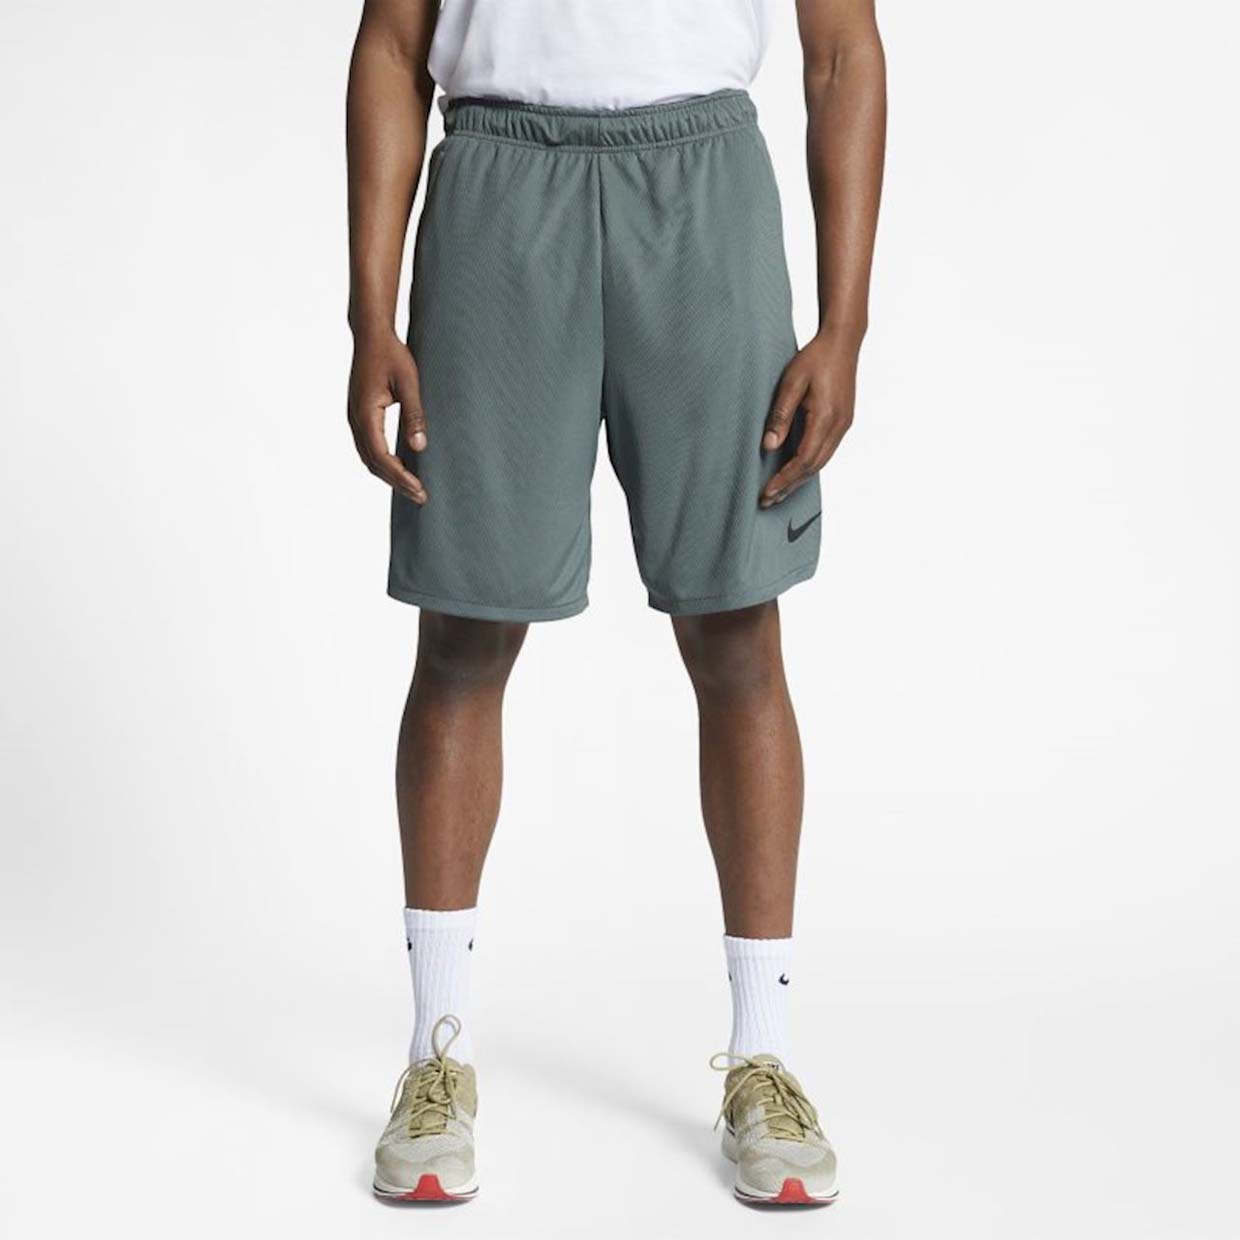 Мужские шорты Nike Nike Dry 890811-344